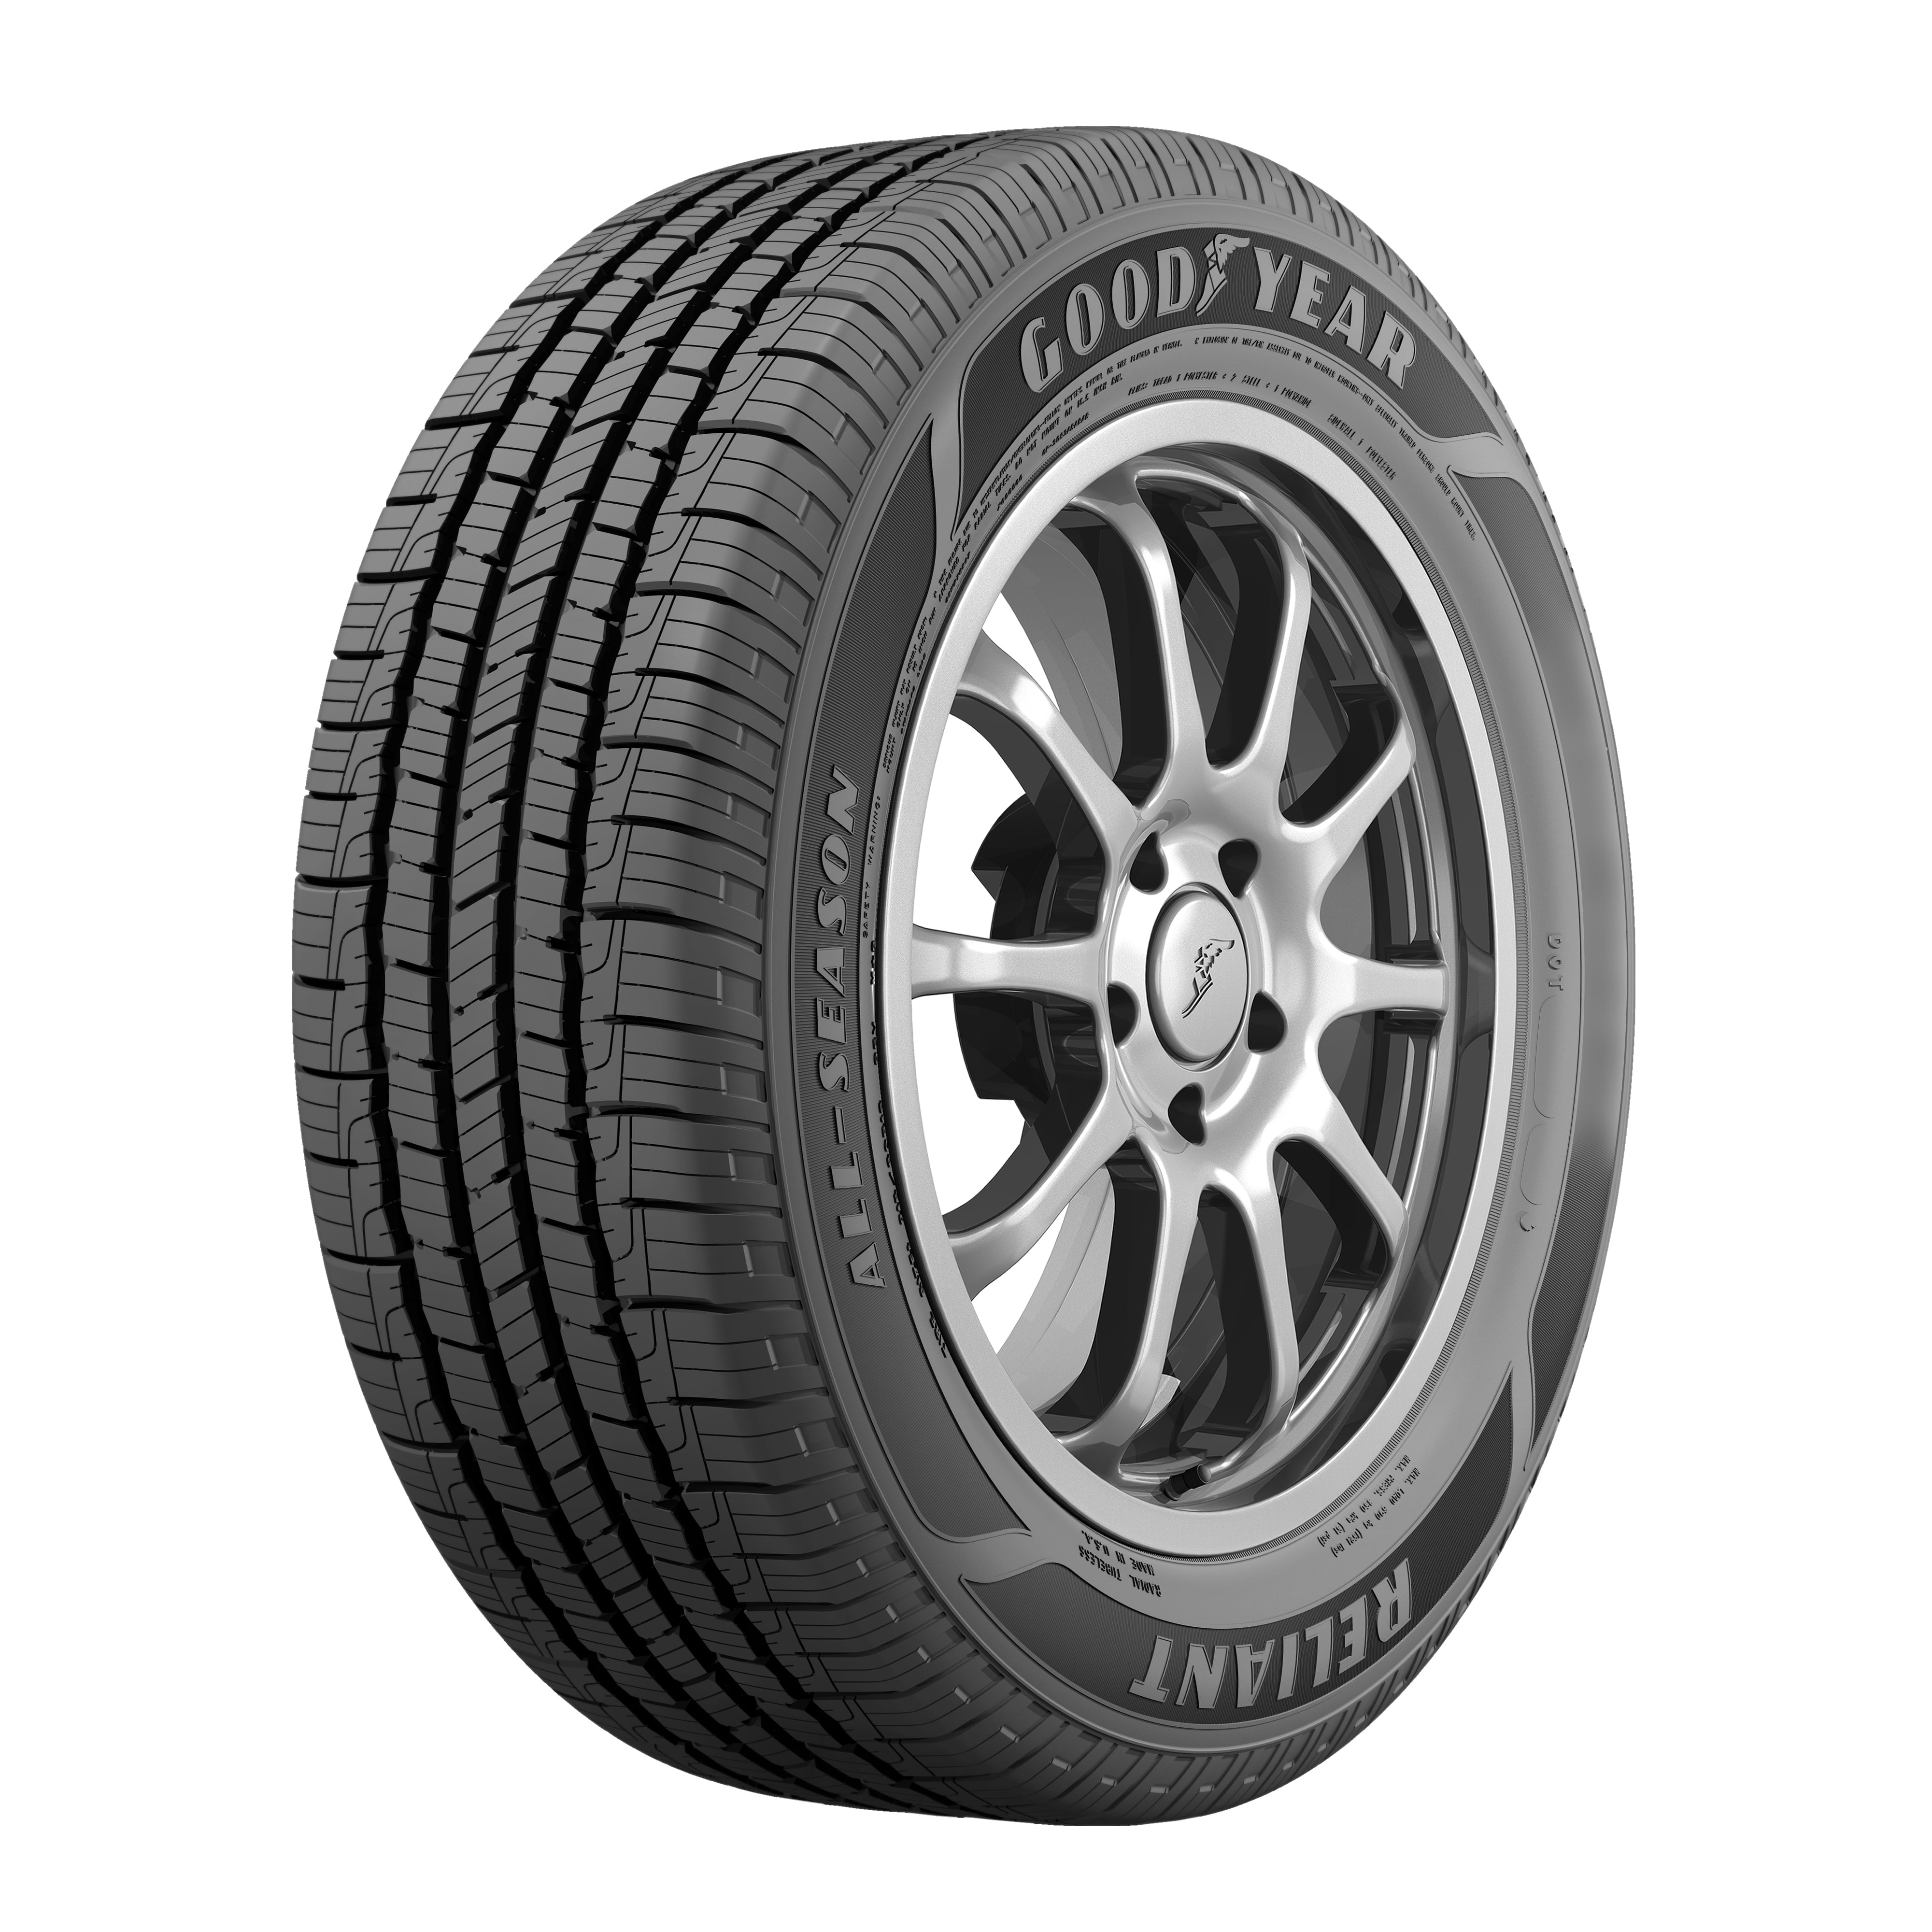 Goodyear Ultra Grip Winter 175/65R14 82 T Tire